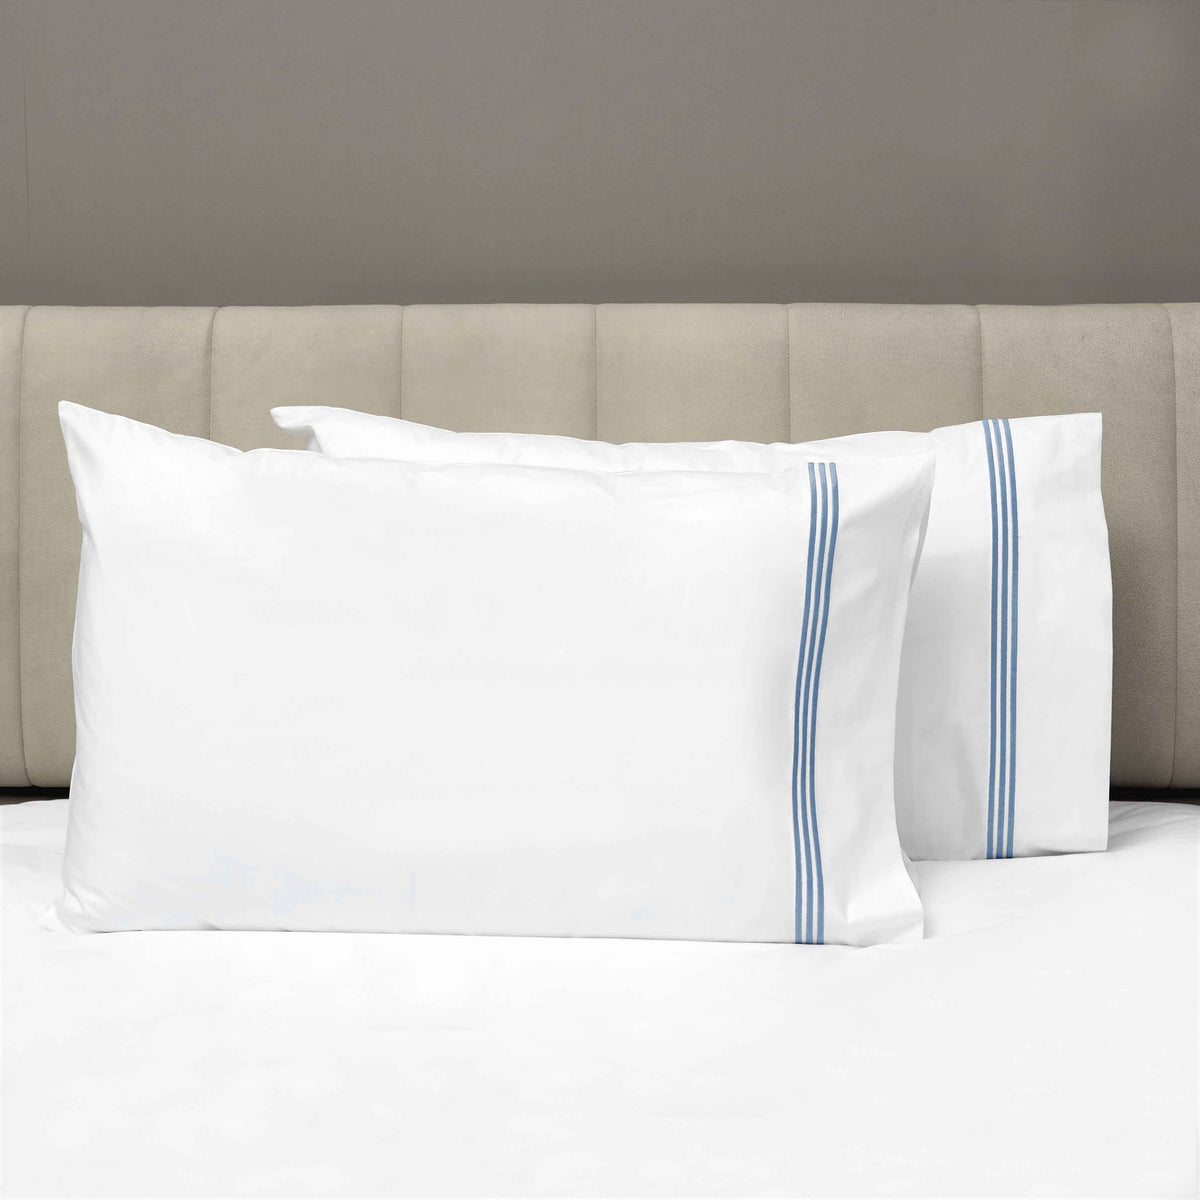 Pair of Pillowcases of Signoria Platinum Percale Bedding in White/Airforce Blue Color